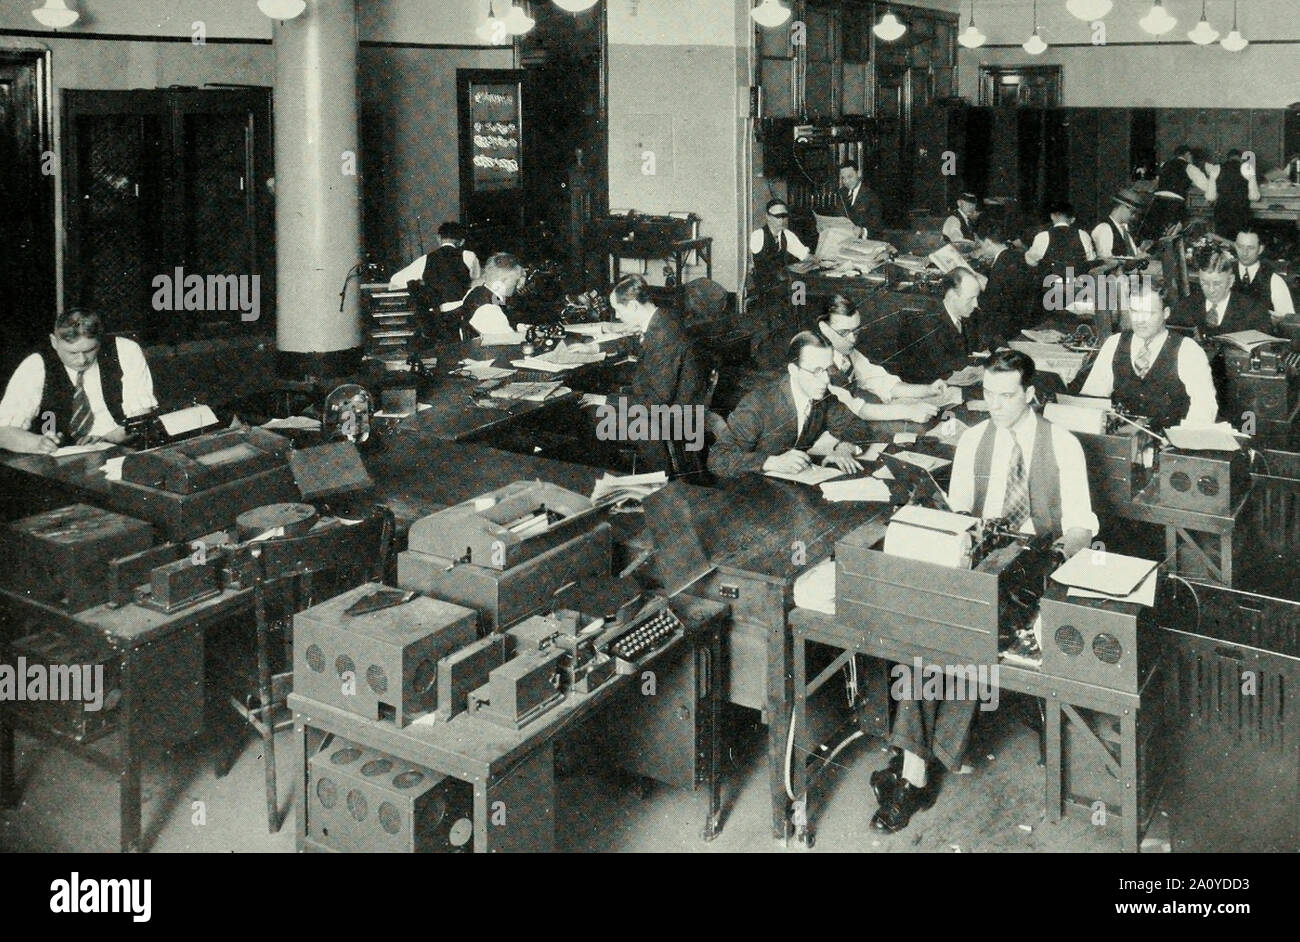 PRESS ASSOCIATION TELEGRAPH OFFICE in 1929 Stock Photo